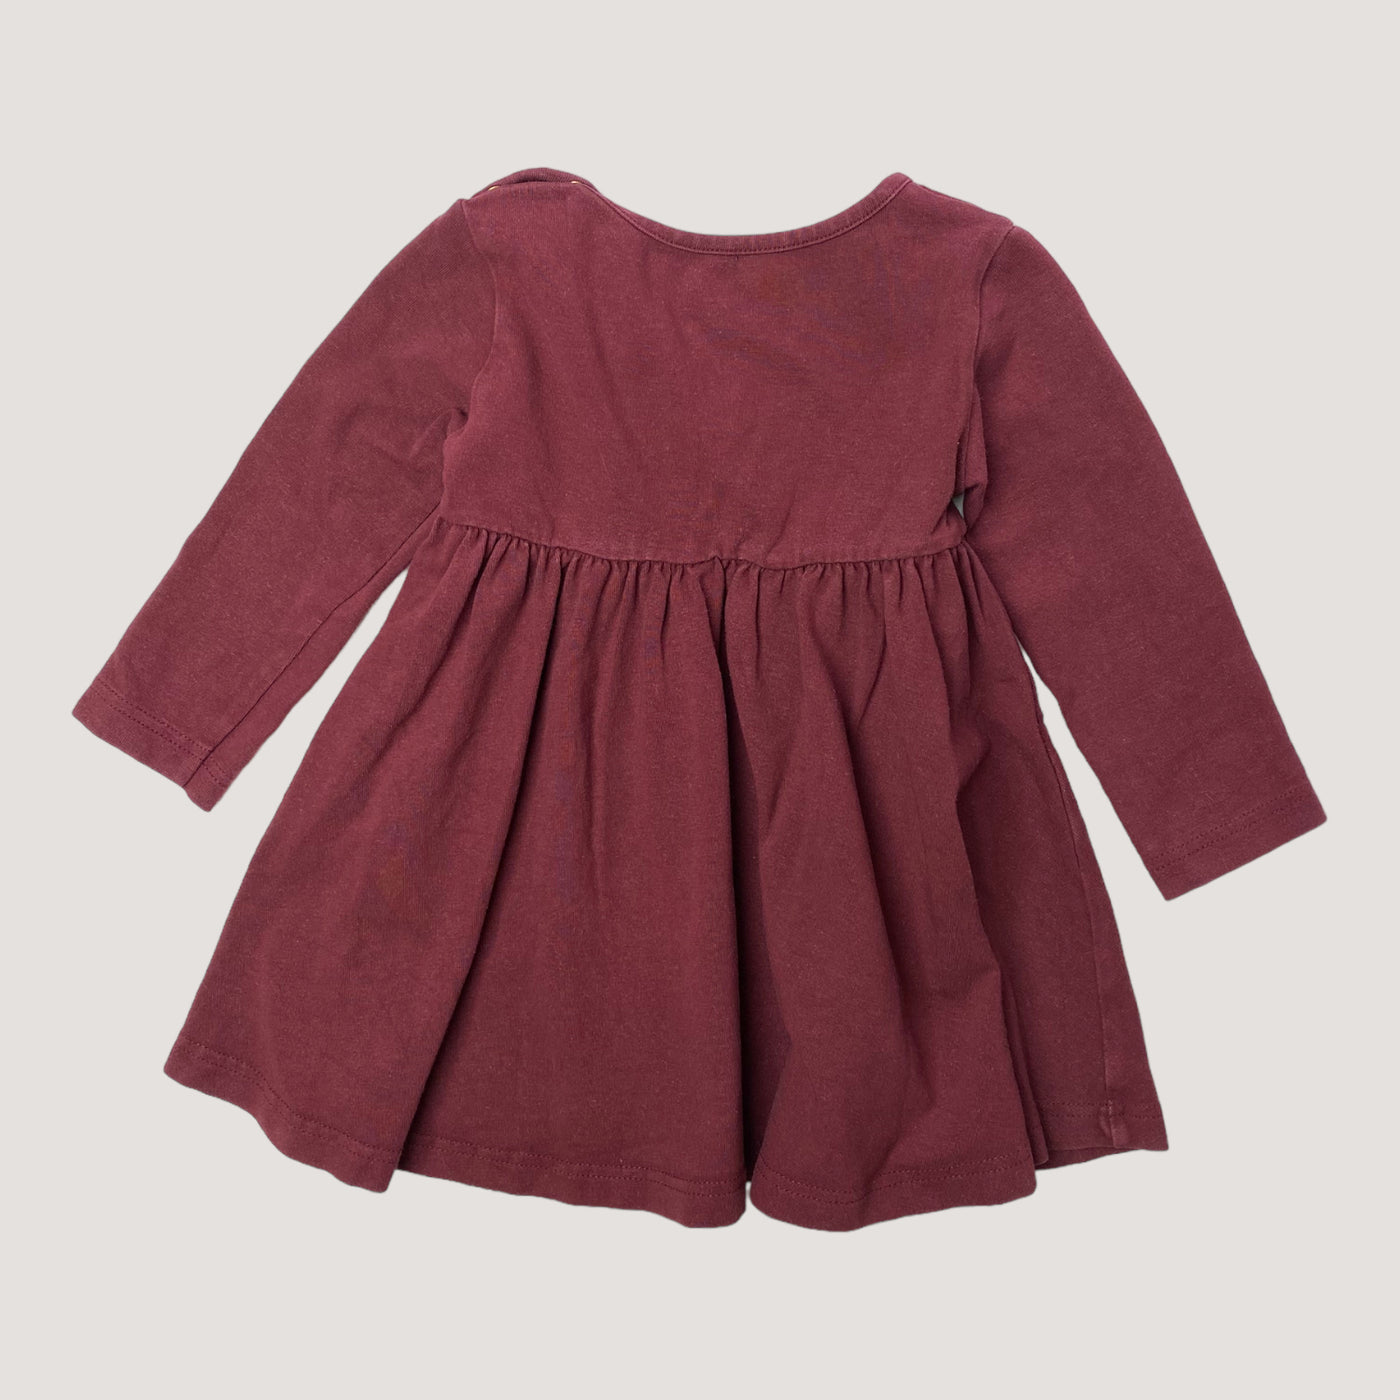 Metsola dress, dark red | 74/80cm